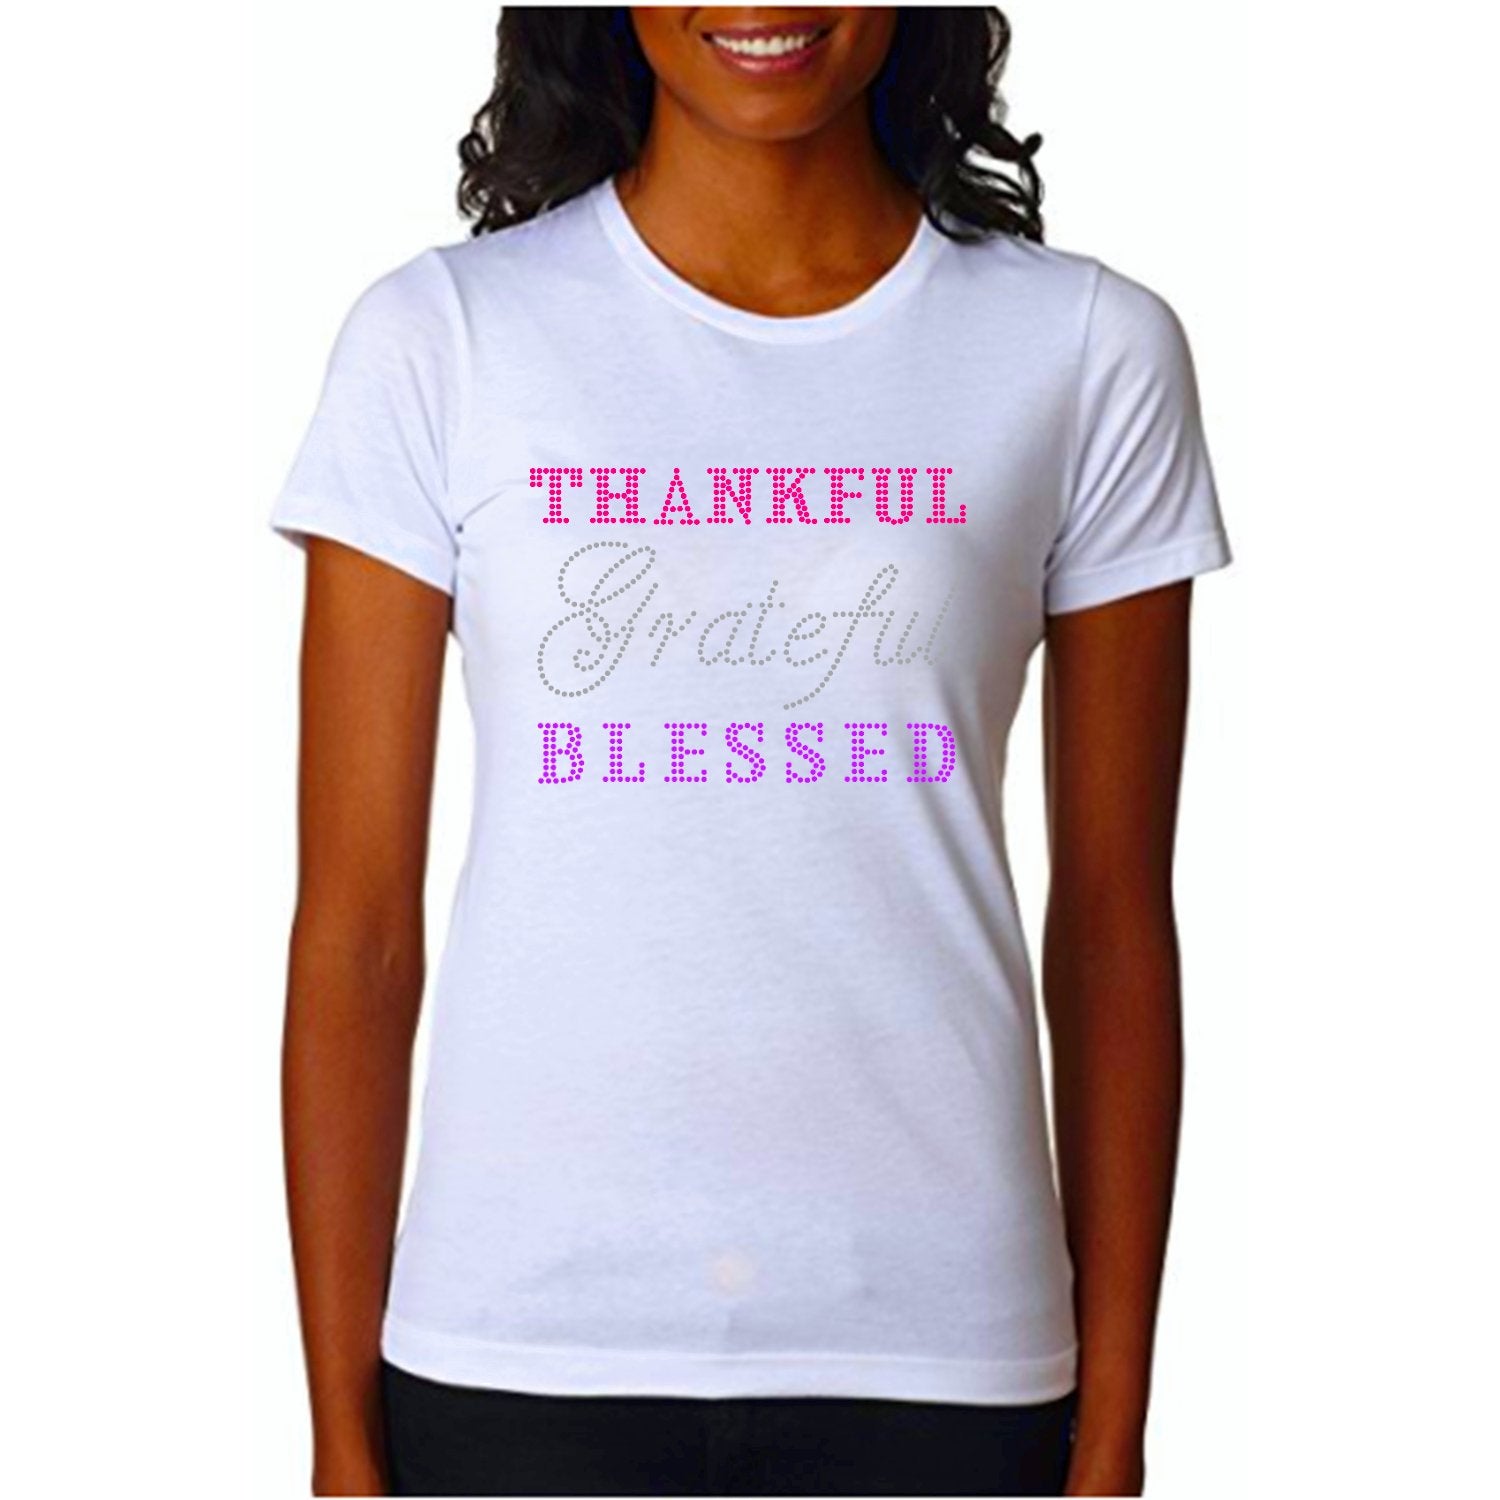 Thankful Grateful Blessed Rhinestone T Shirt